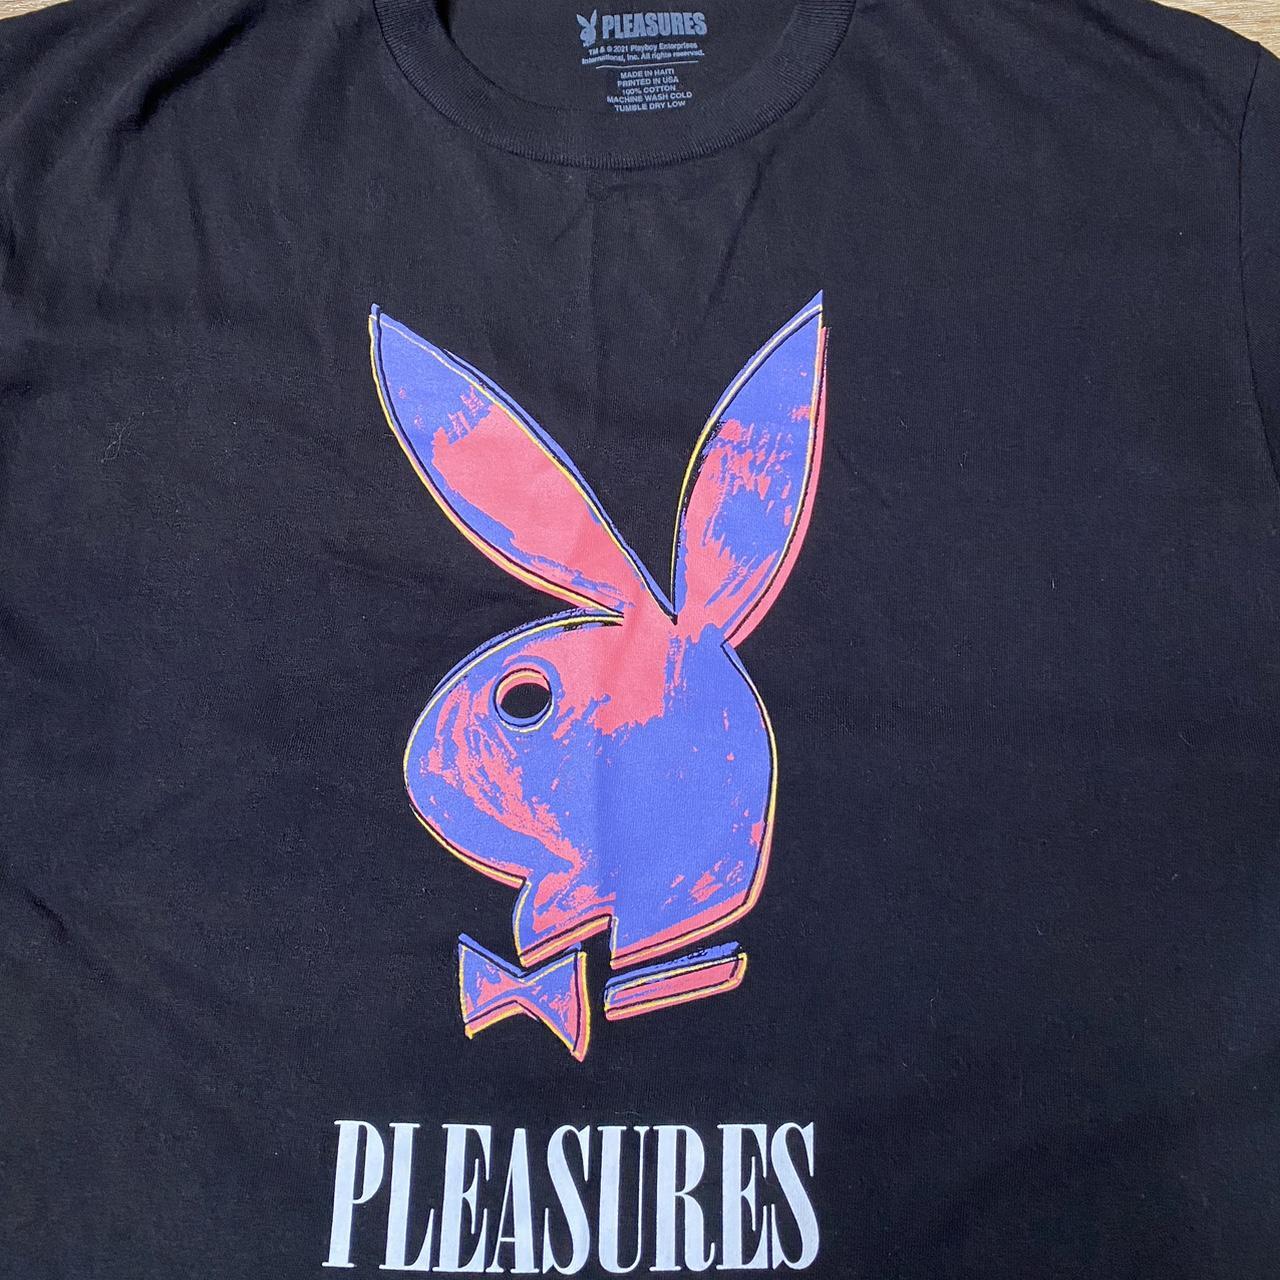 Pleasures Men's Black and Pink T-shirt (2)